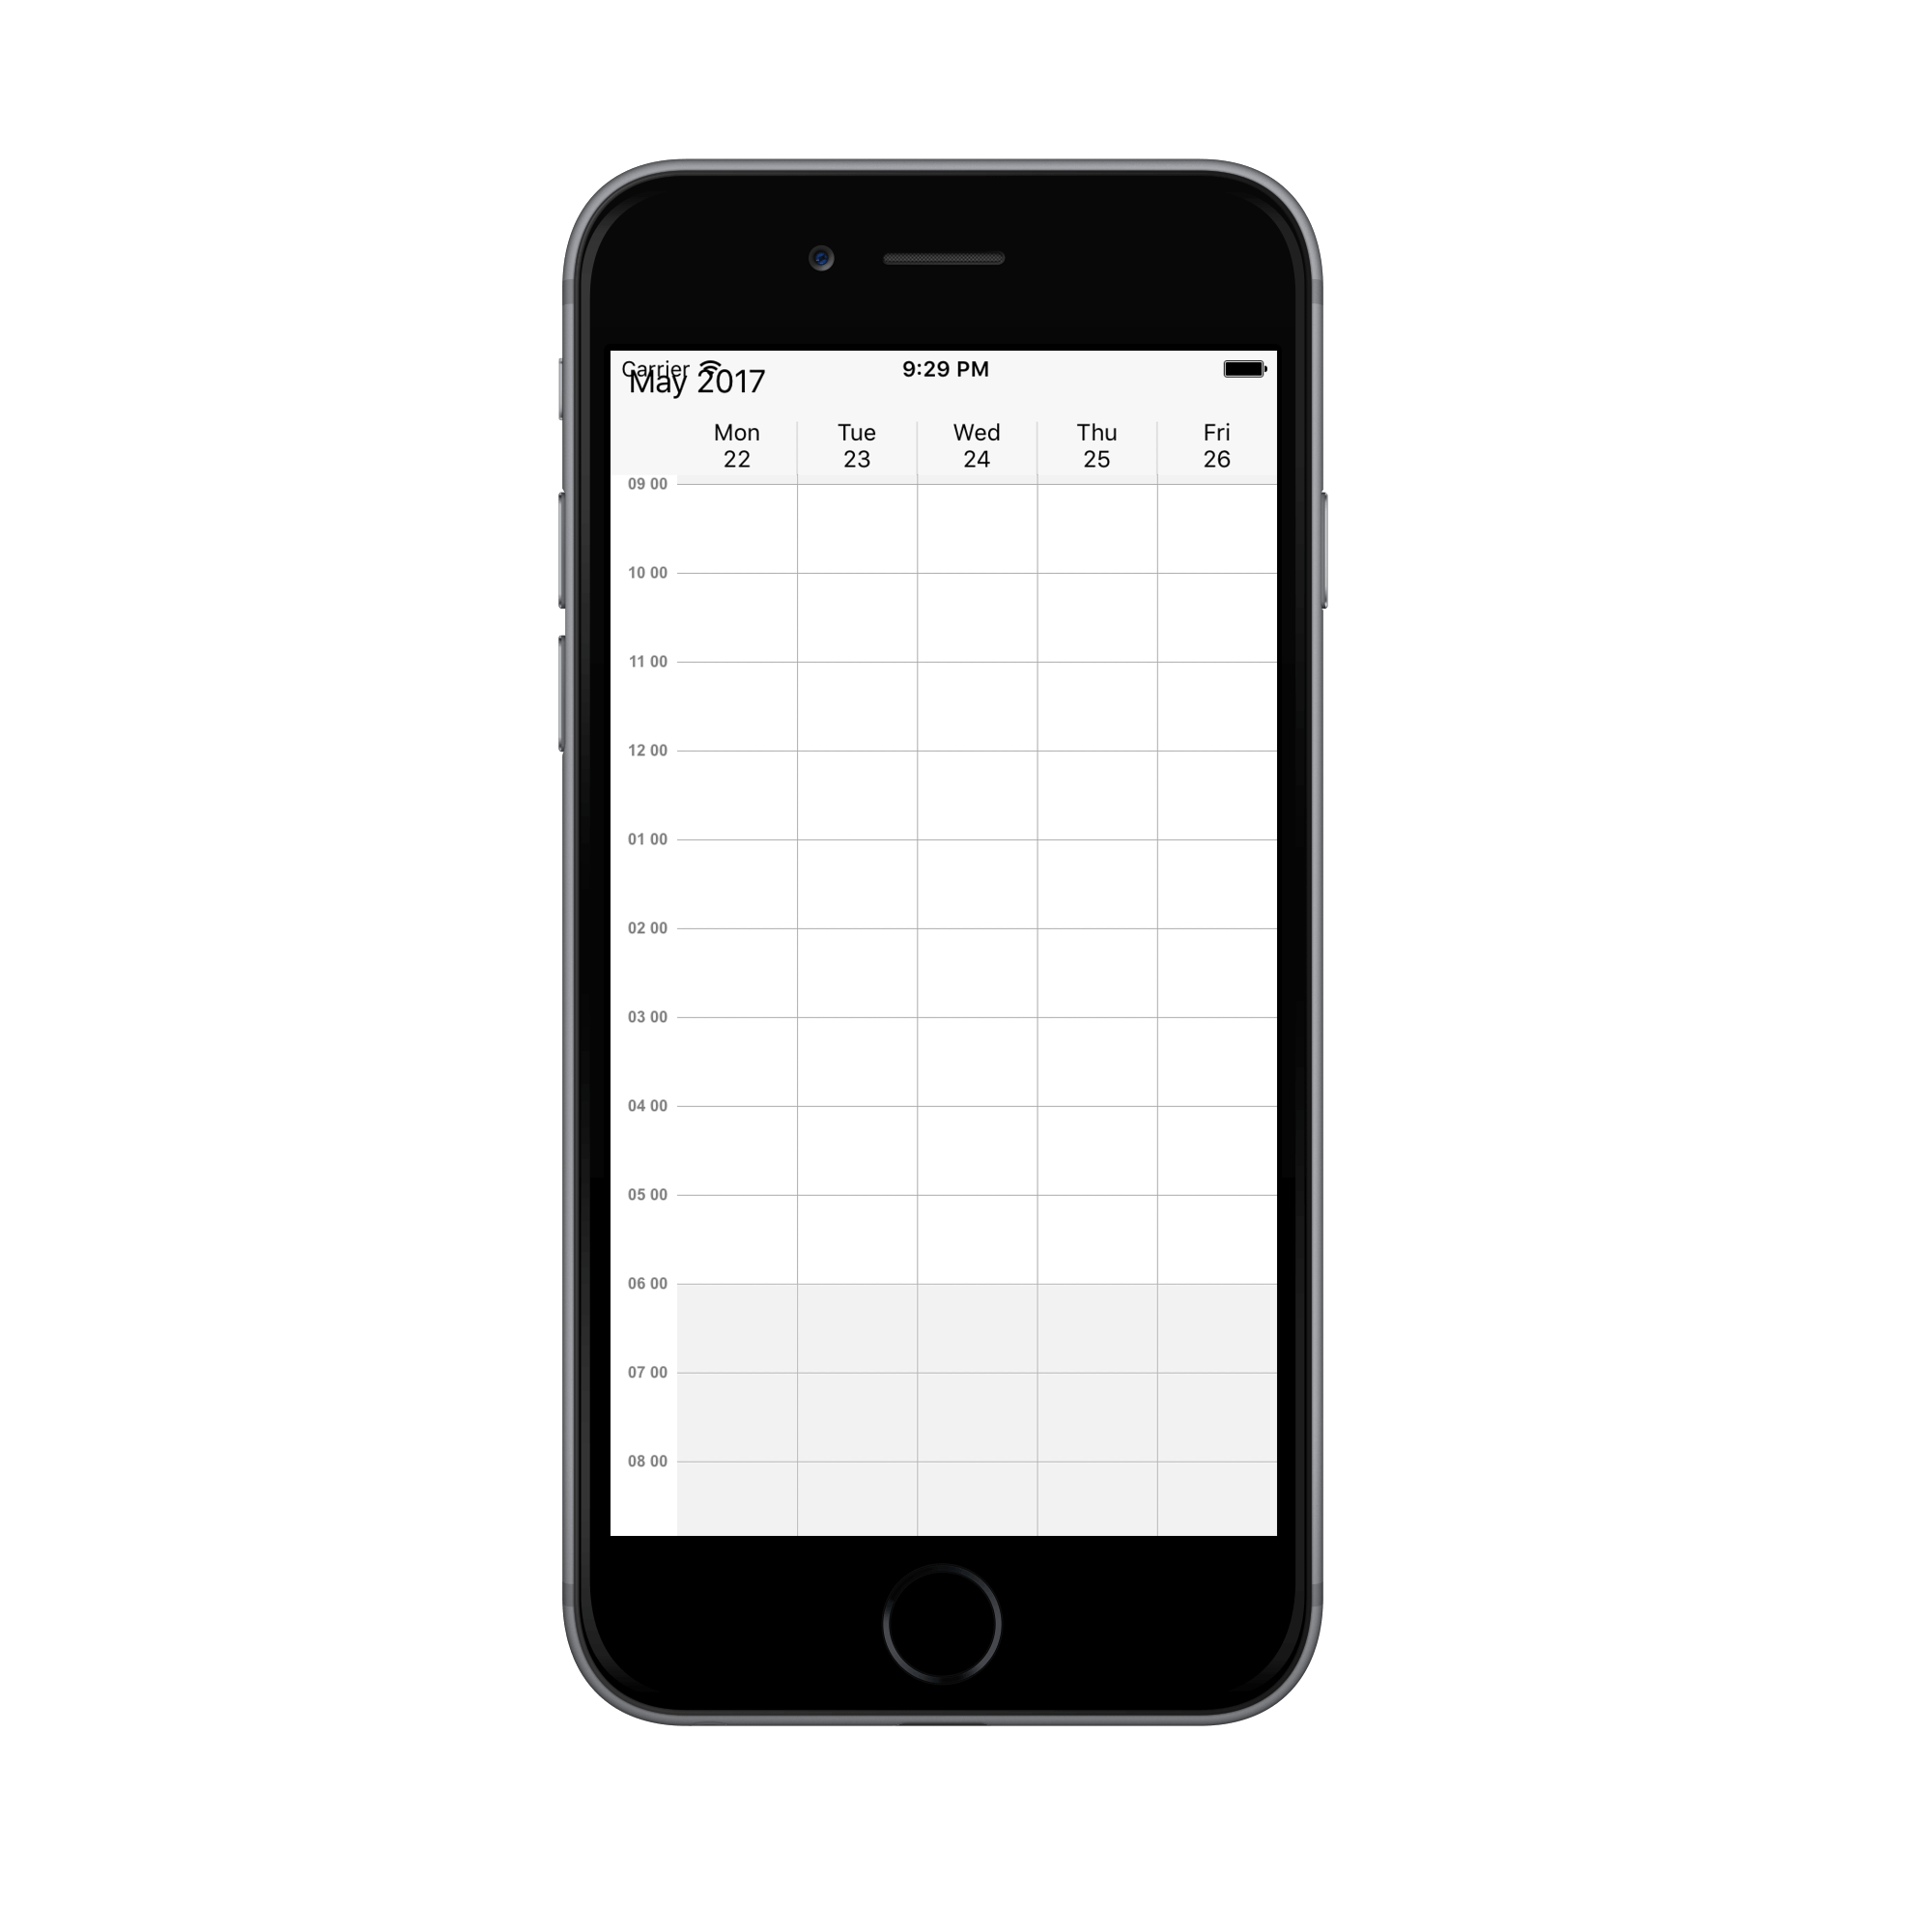 Work week view time label customization for schedule in Xamarin.iOS